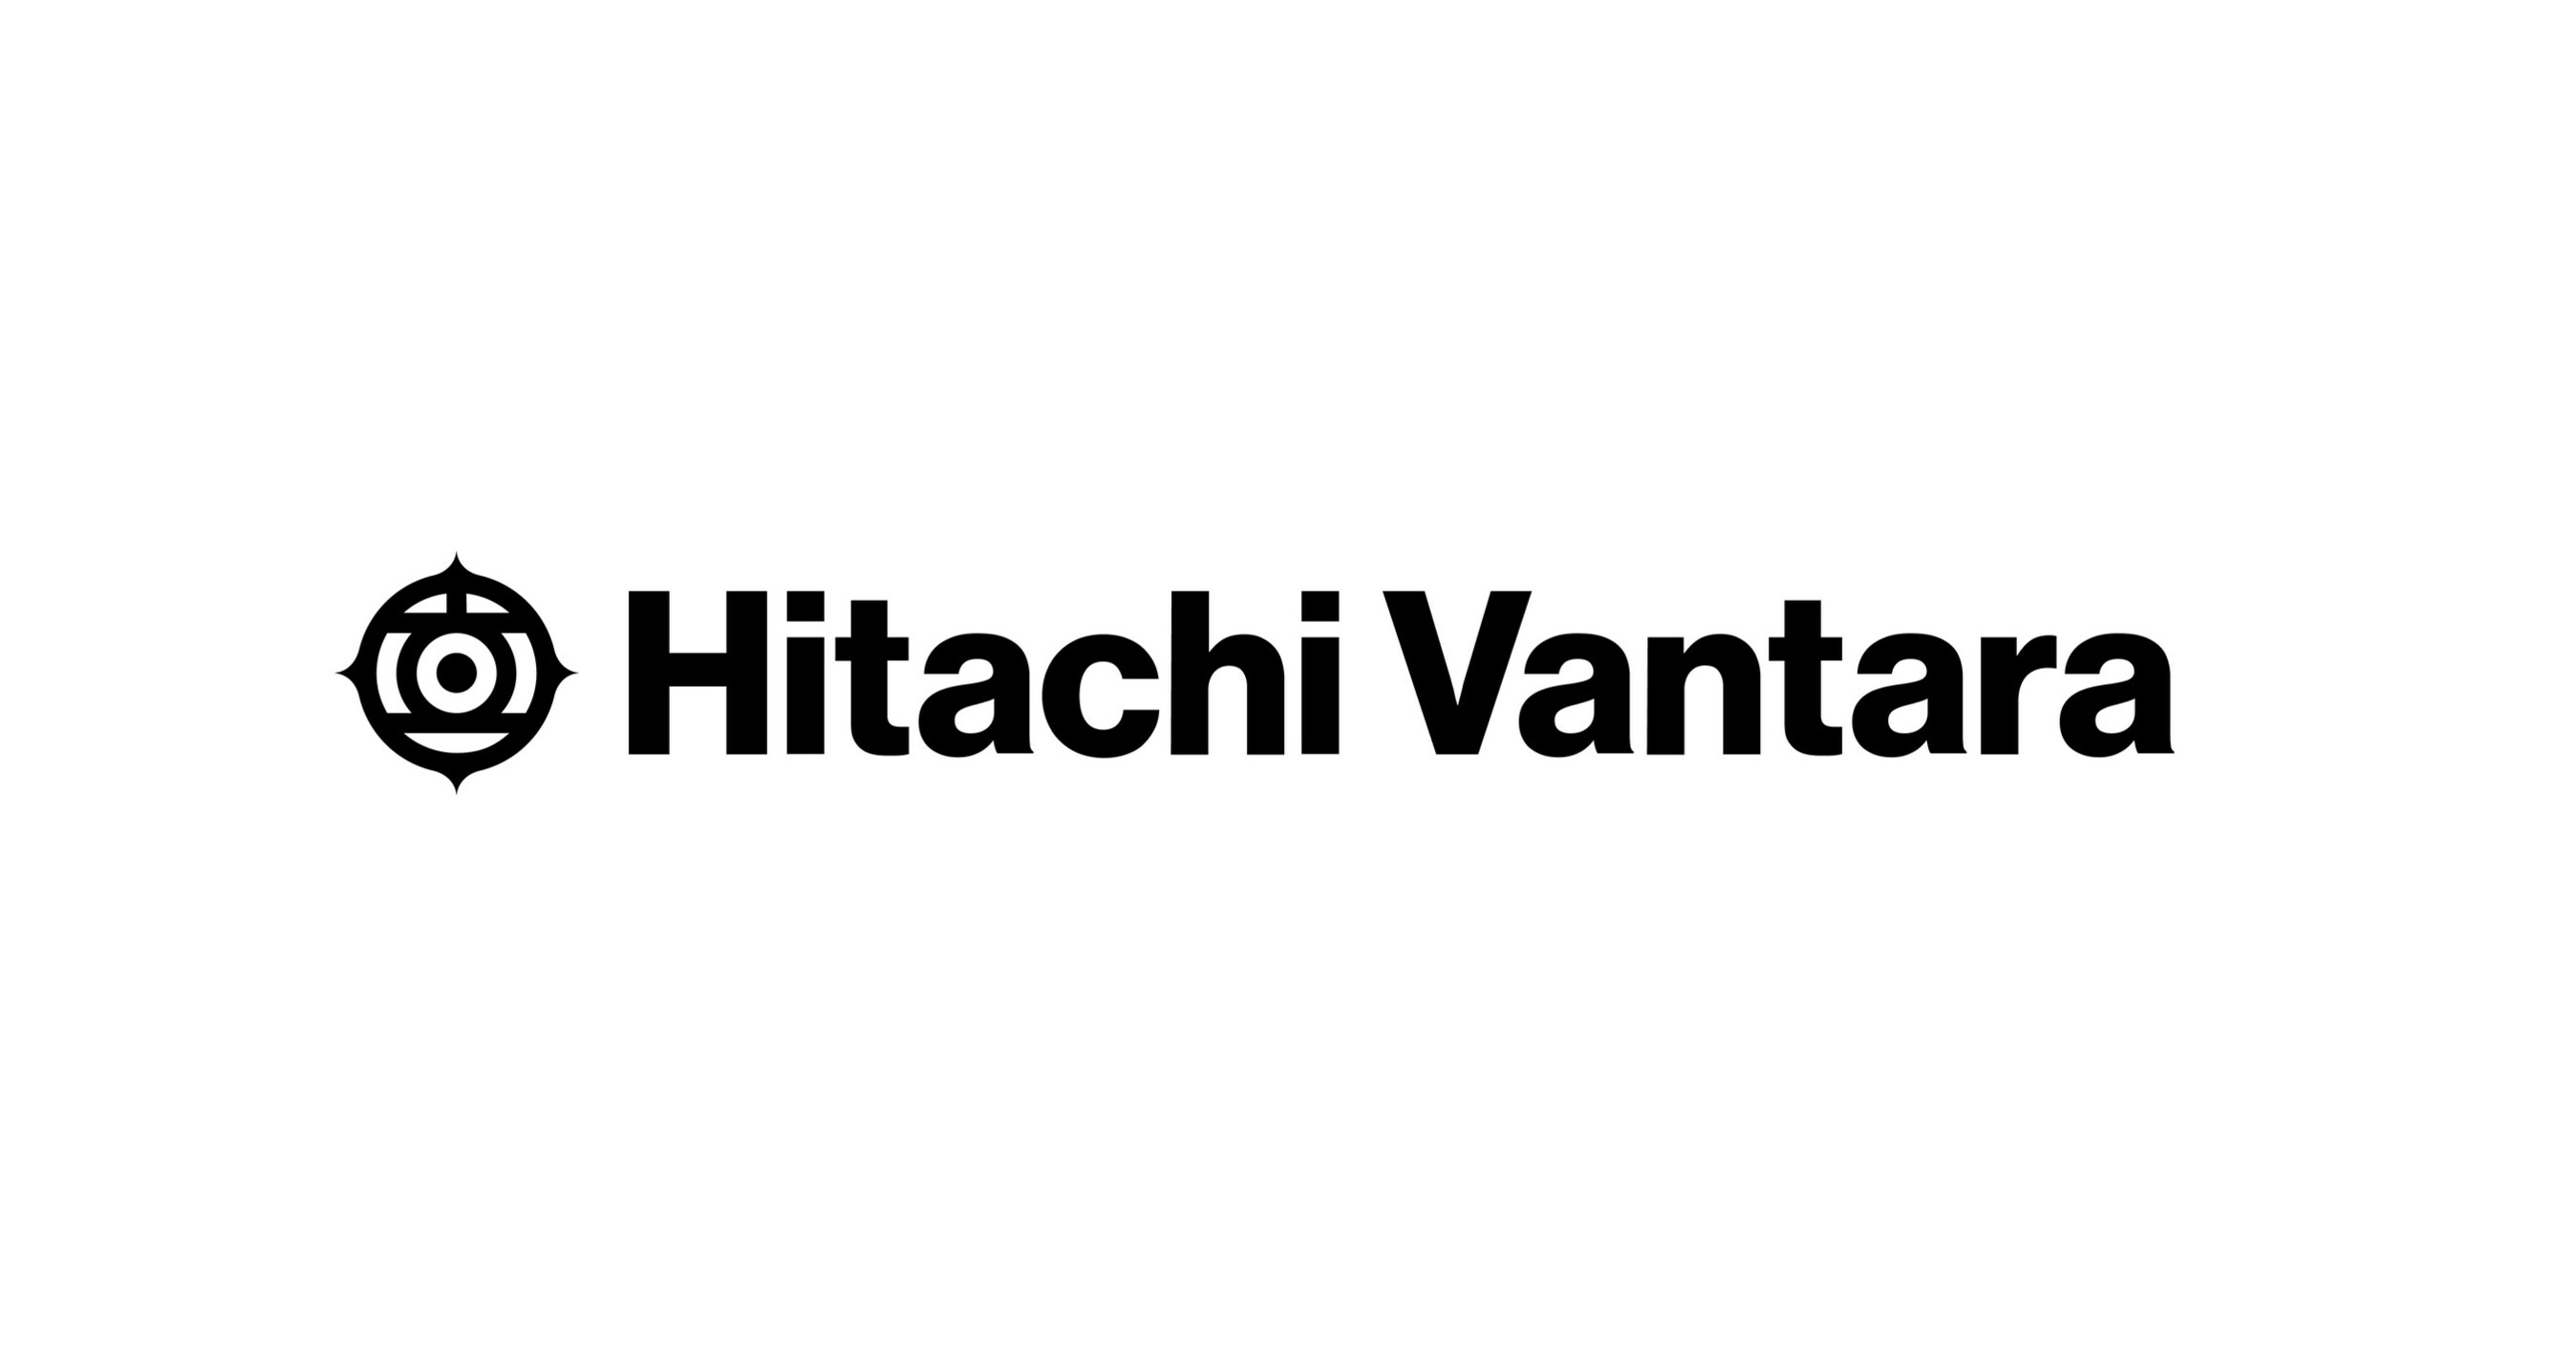 Hitachi Vantara Announces Integrated Solution With Microsoft Azure That Transforms Hybrid Cloud Management